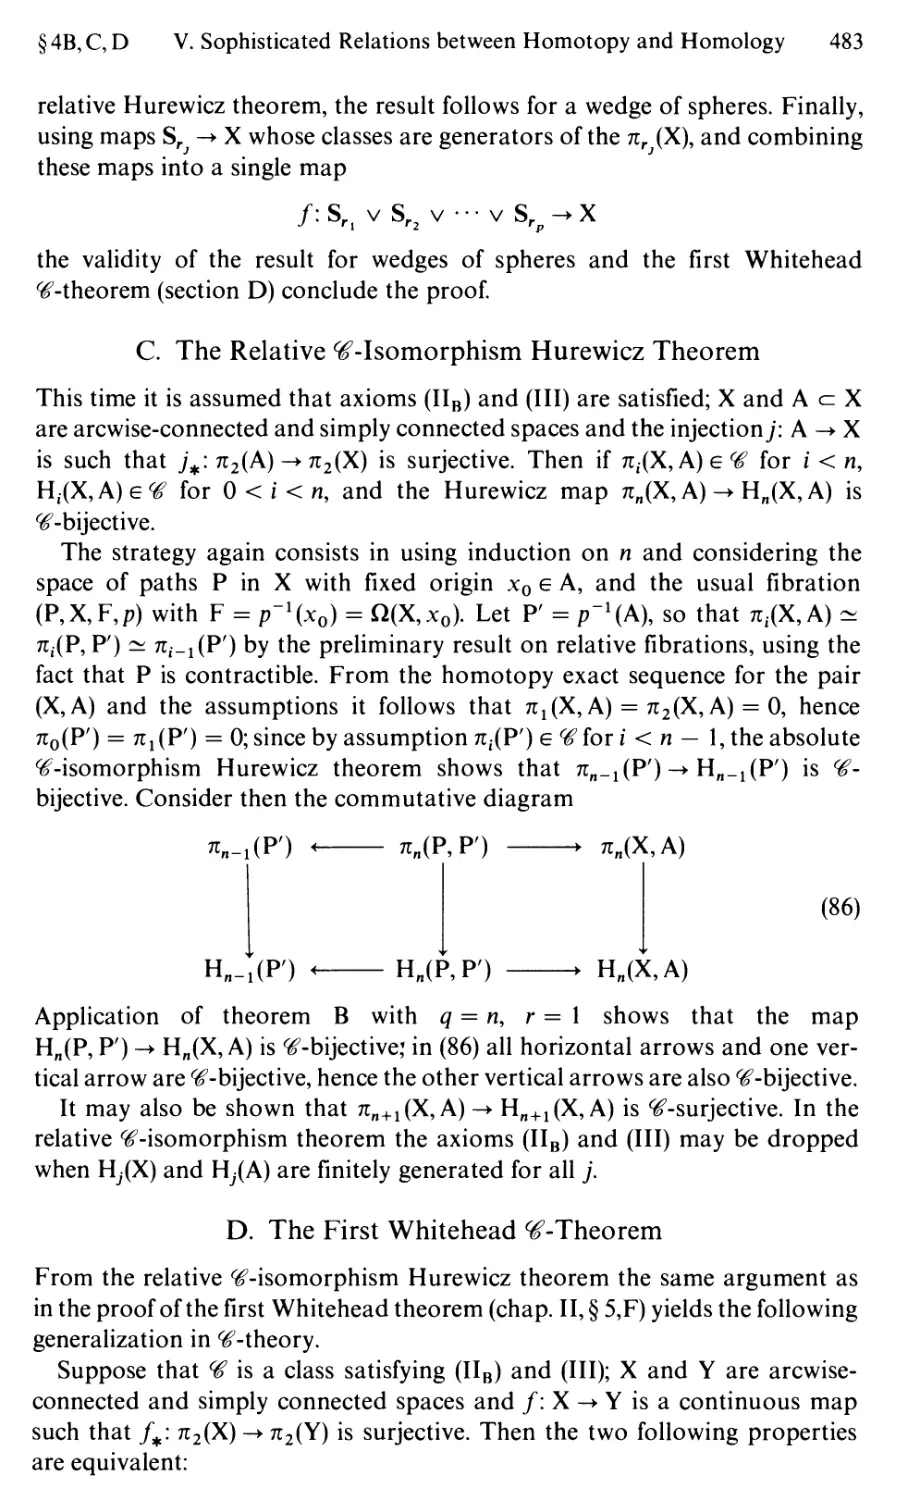 C. The Relative C-Isomorphism Hurewicz Theorem
D. The First Whitehead C-Theorem